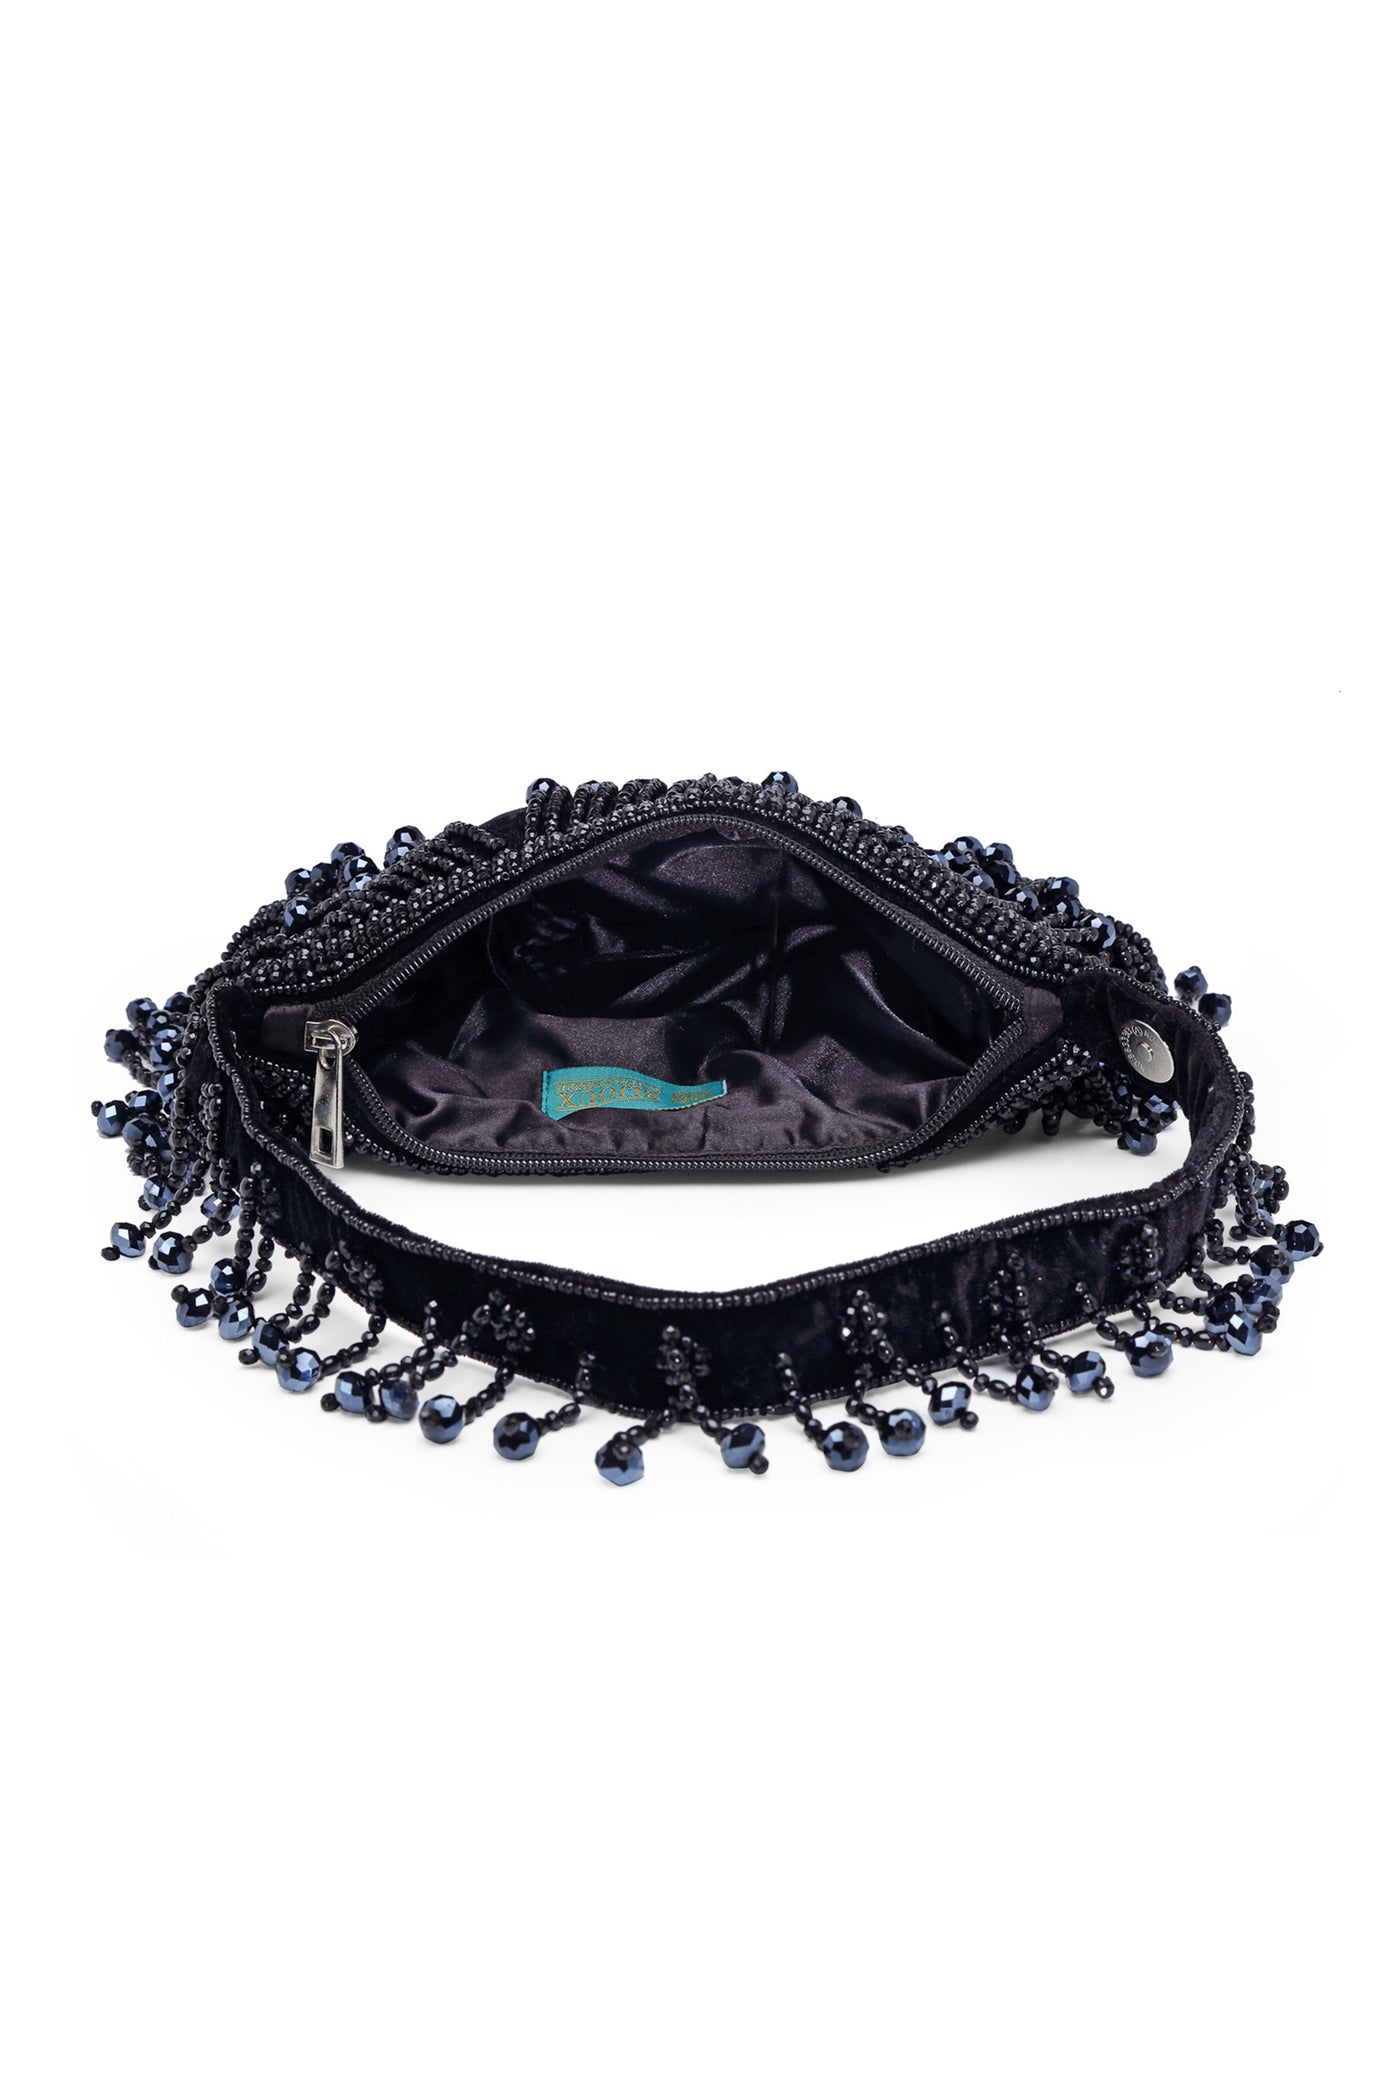 Bijoux by priya chandna La Bolsa In Black fashion accessories indian designer wear online shopping melange singapore